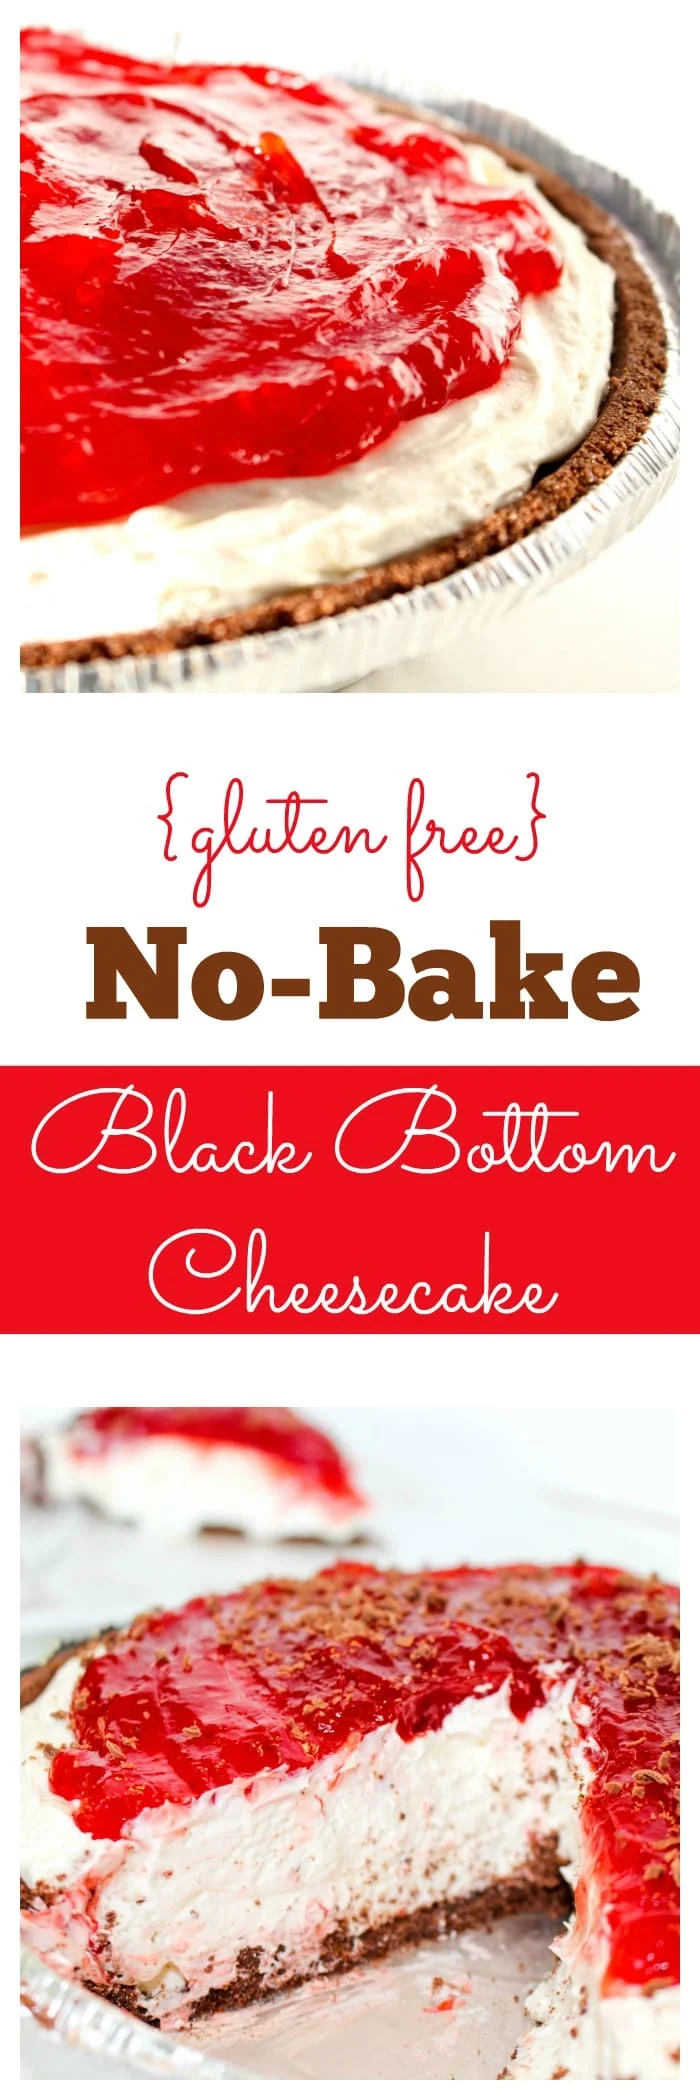 Gluten Free Black Bottom Cheesecake. Chocolate graham crust, tangy cheesecake, and sweet berry topping.